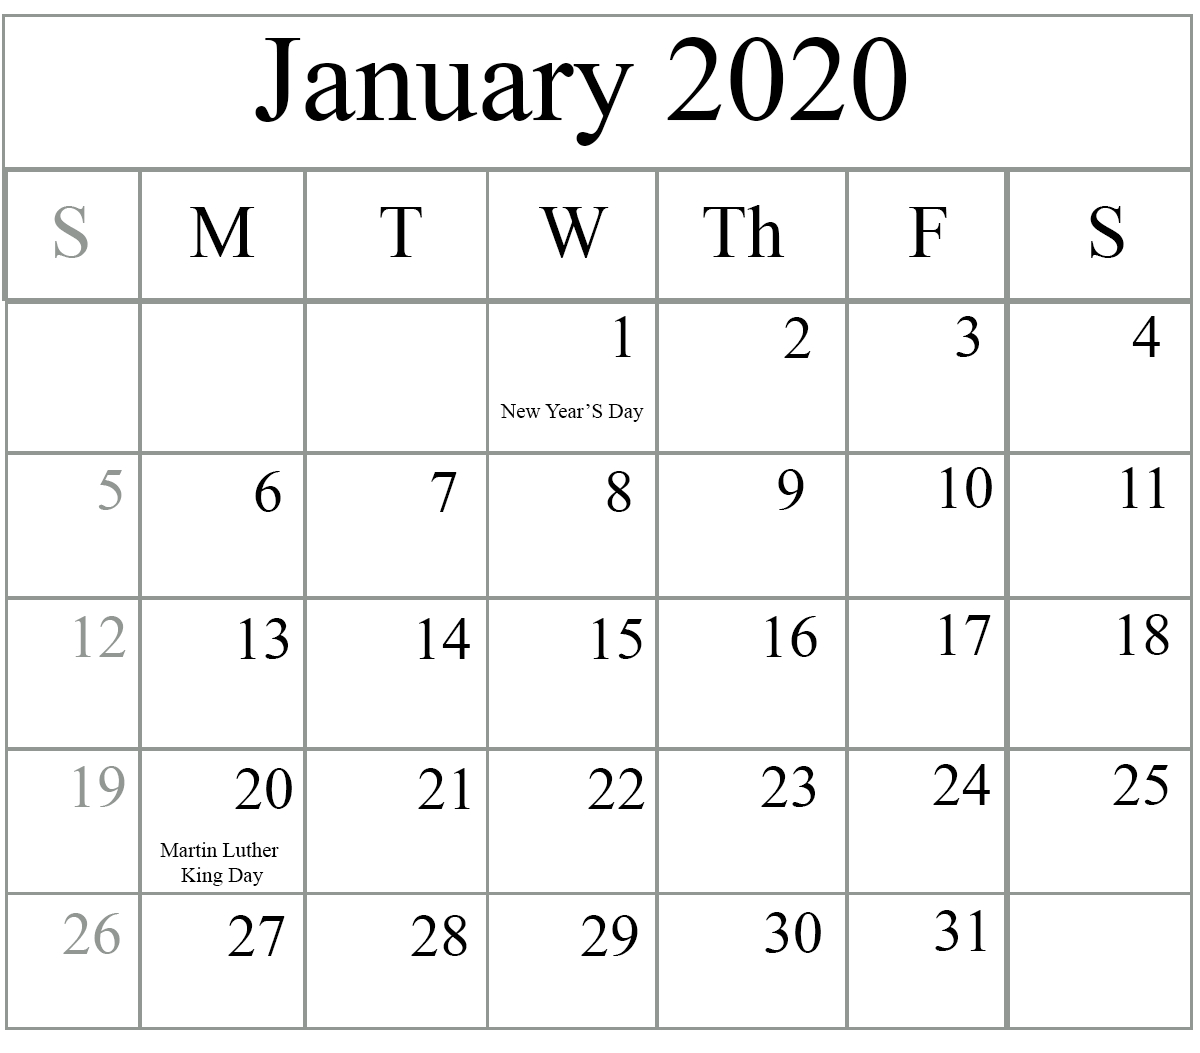 January 2020 Calendar Pdf | Free Printable Calendar